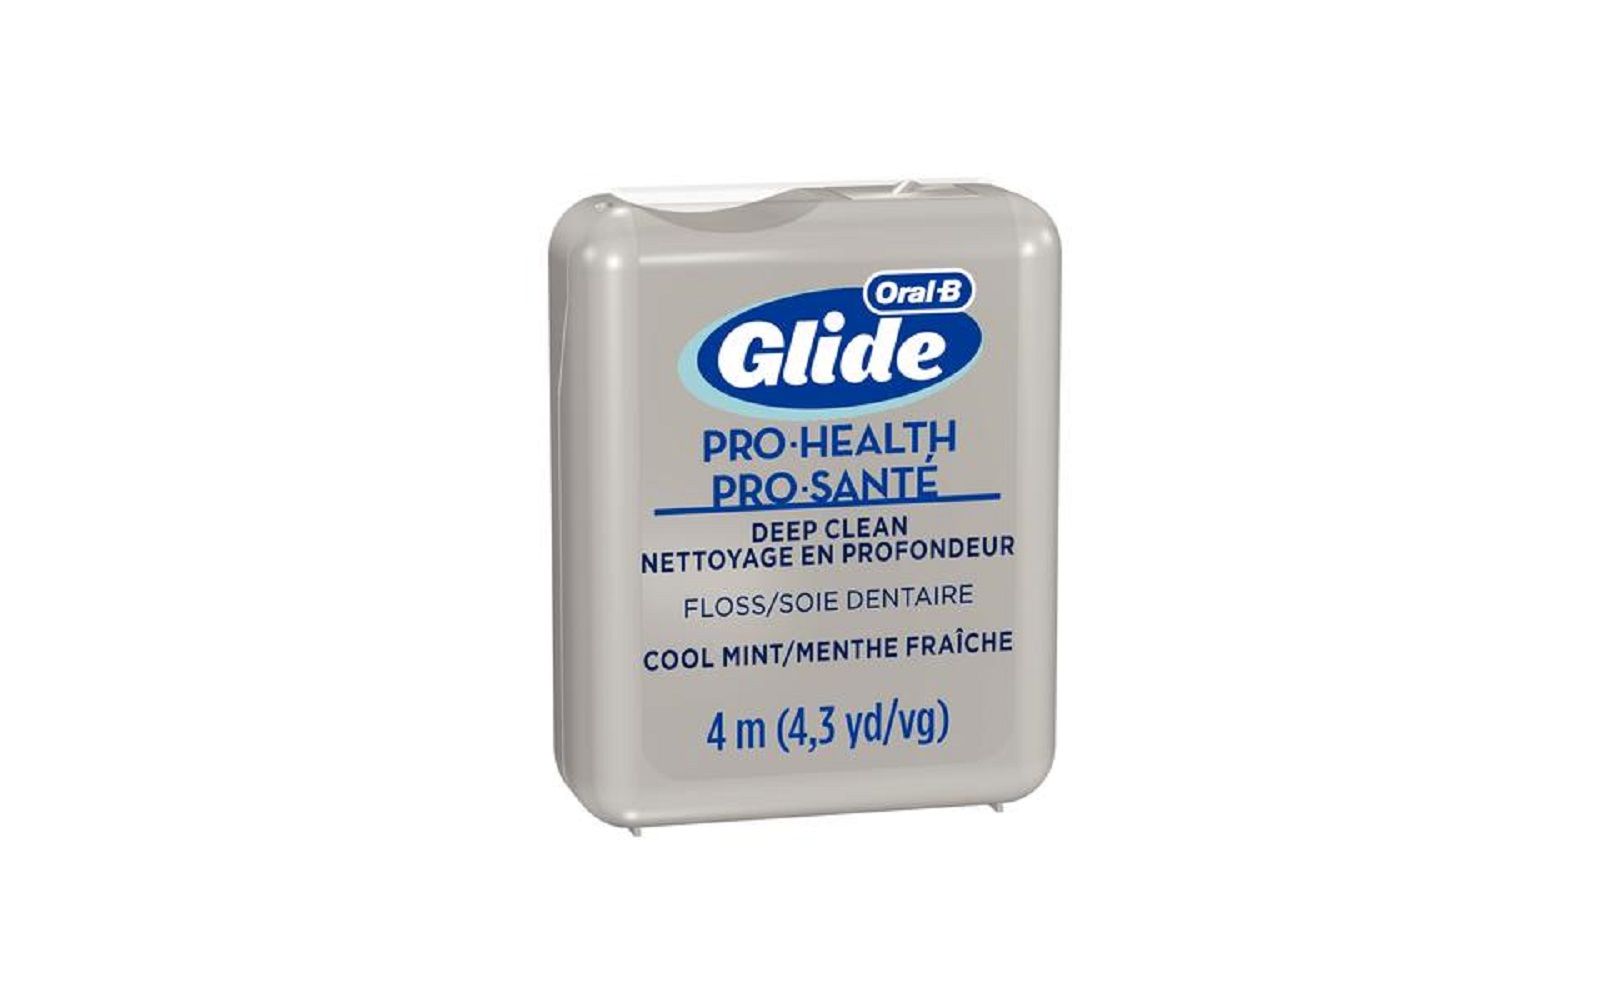 Oral-b® glide pro-health deep clean floss – mint, 72/pkg - procter & gamble company